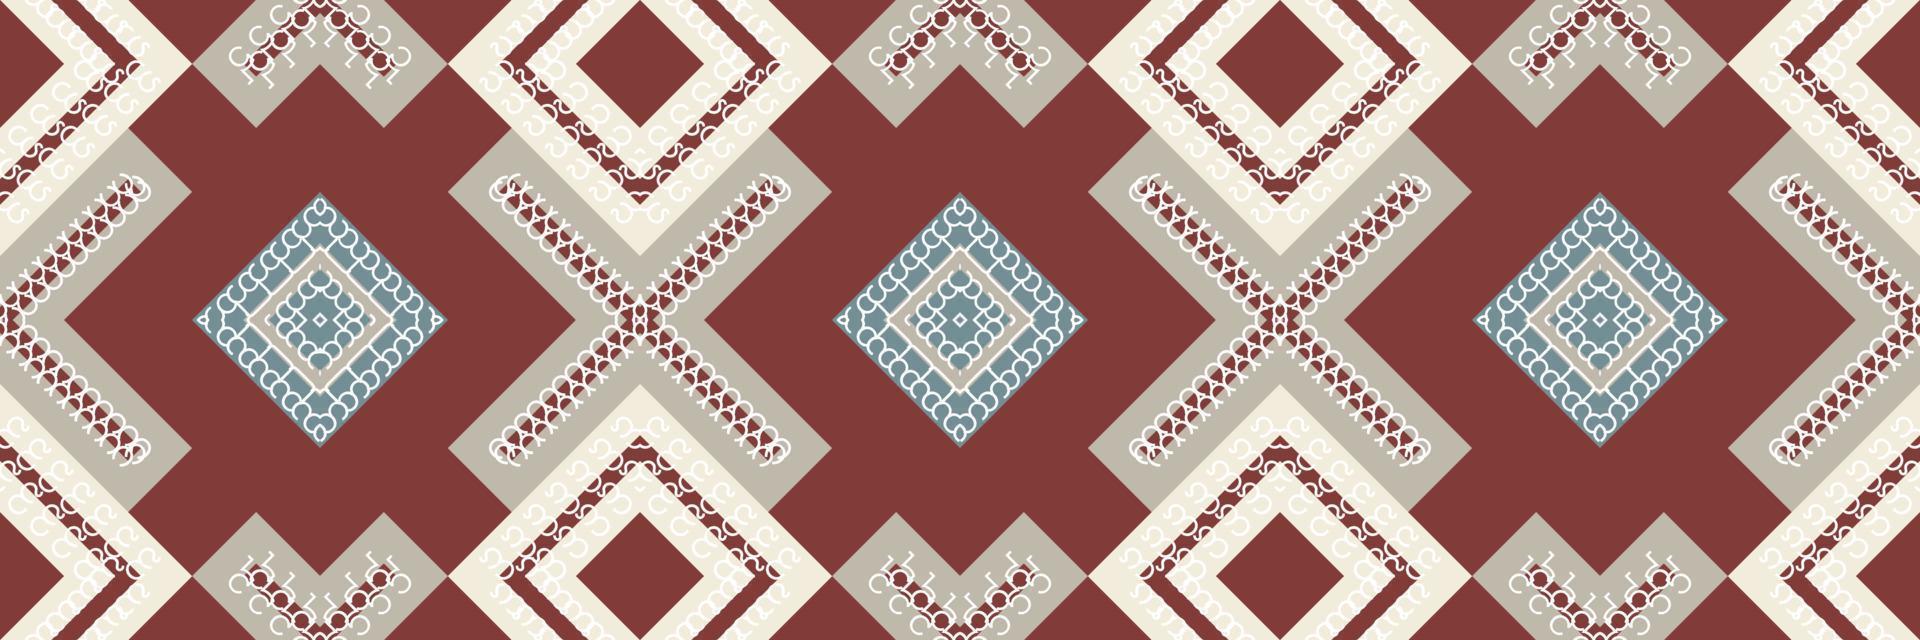 Ikat Seamless Pattern  ikat vector batik textile seamless pattern digital vector design for Print saree Kurti Borneo Fabric border brush symbols swatches stylish